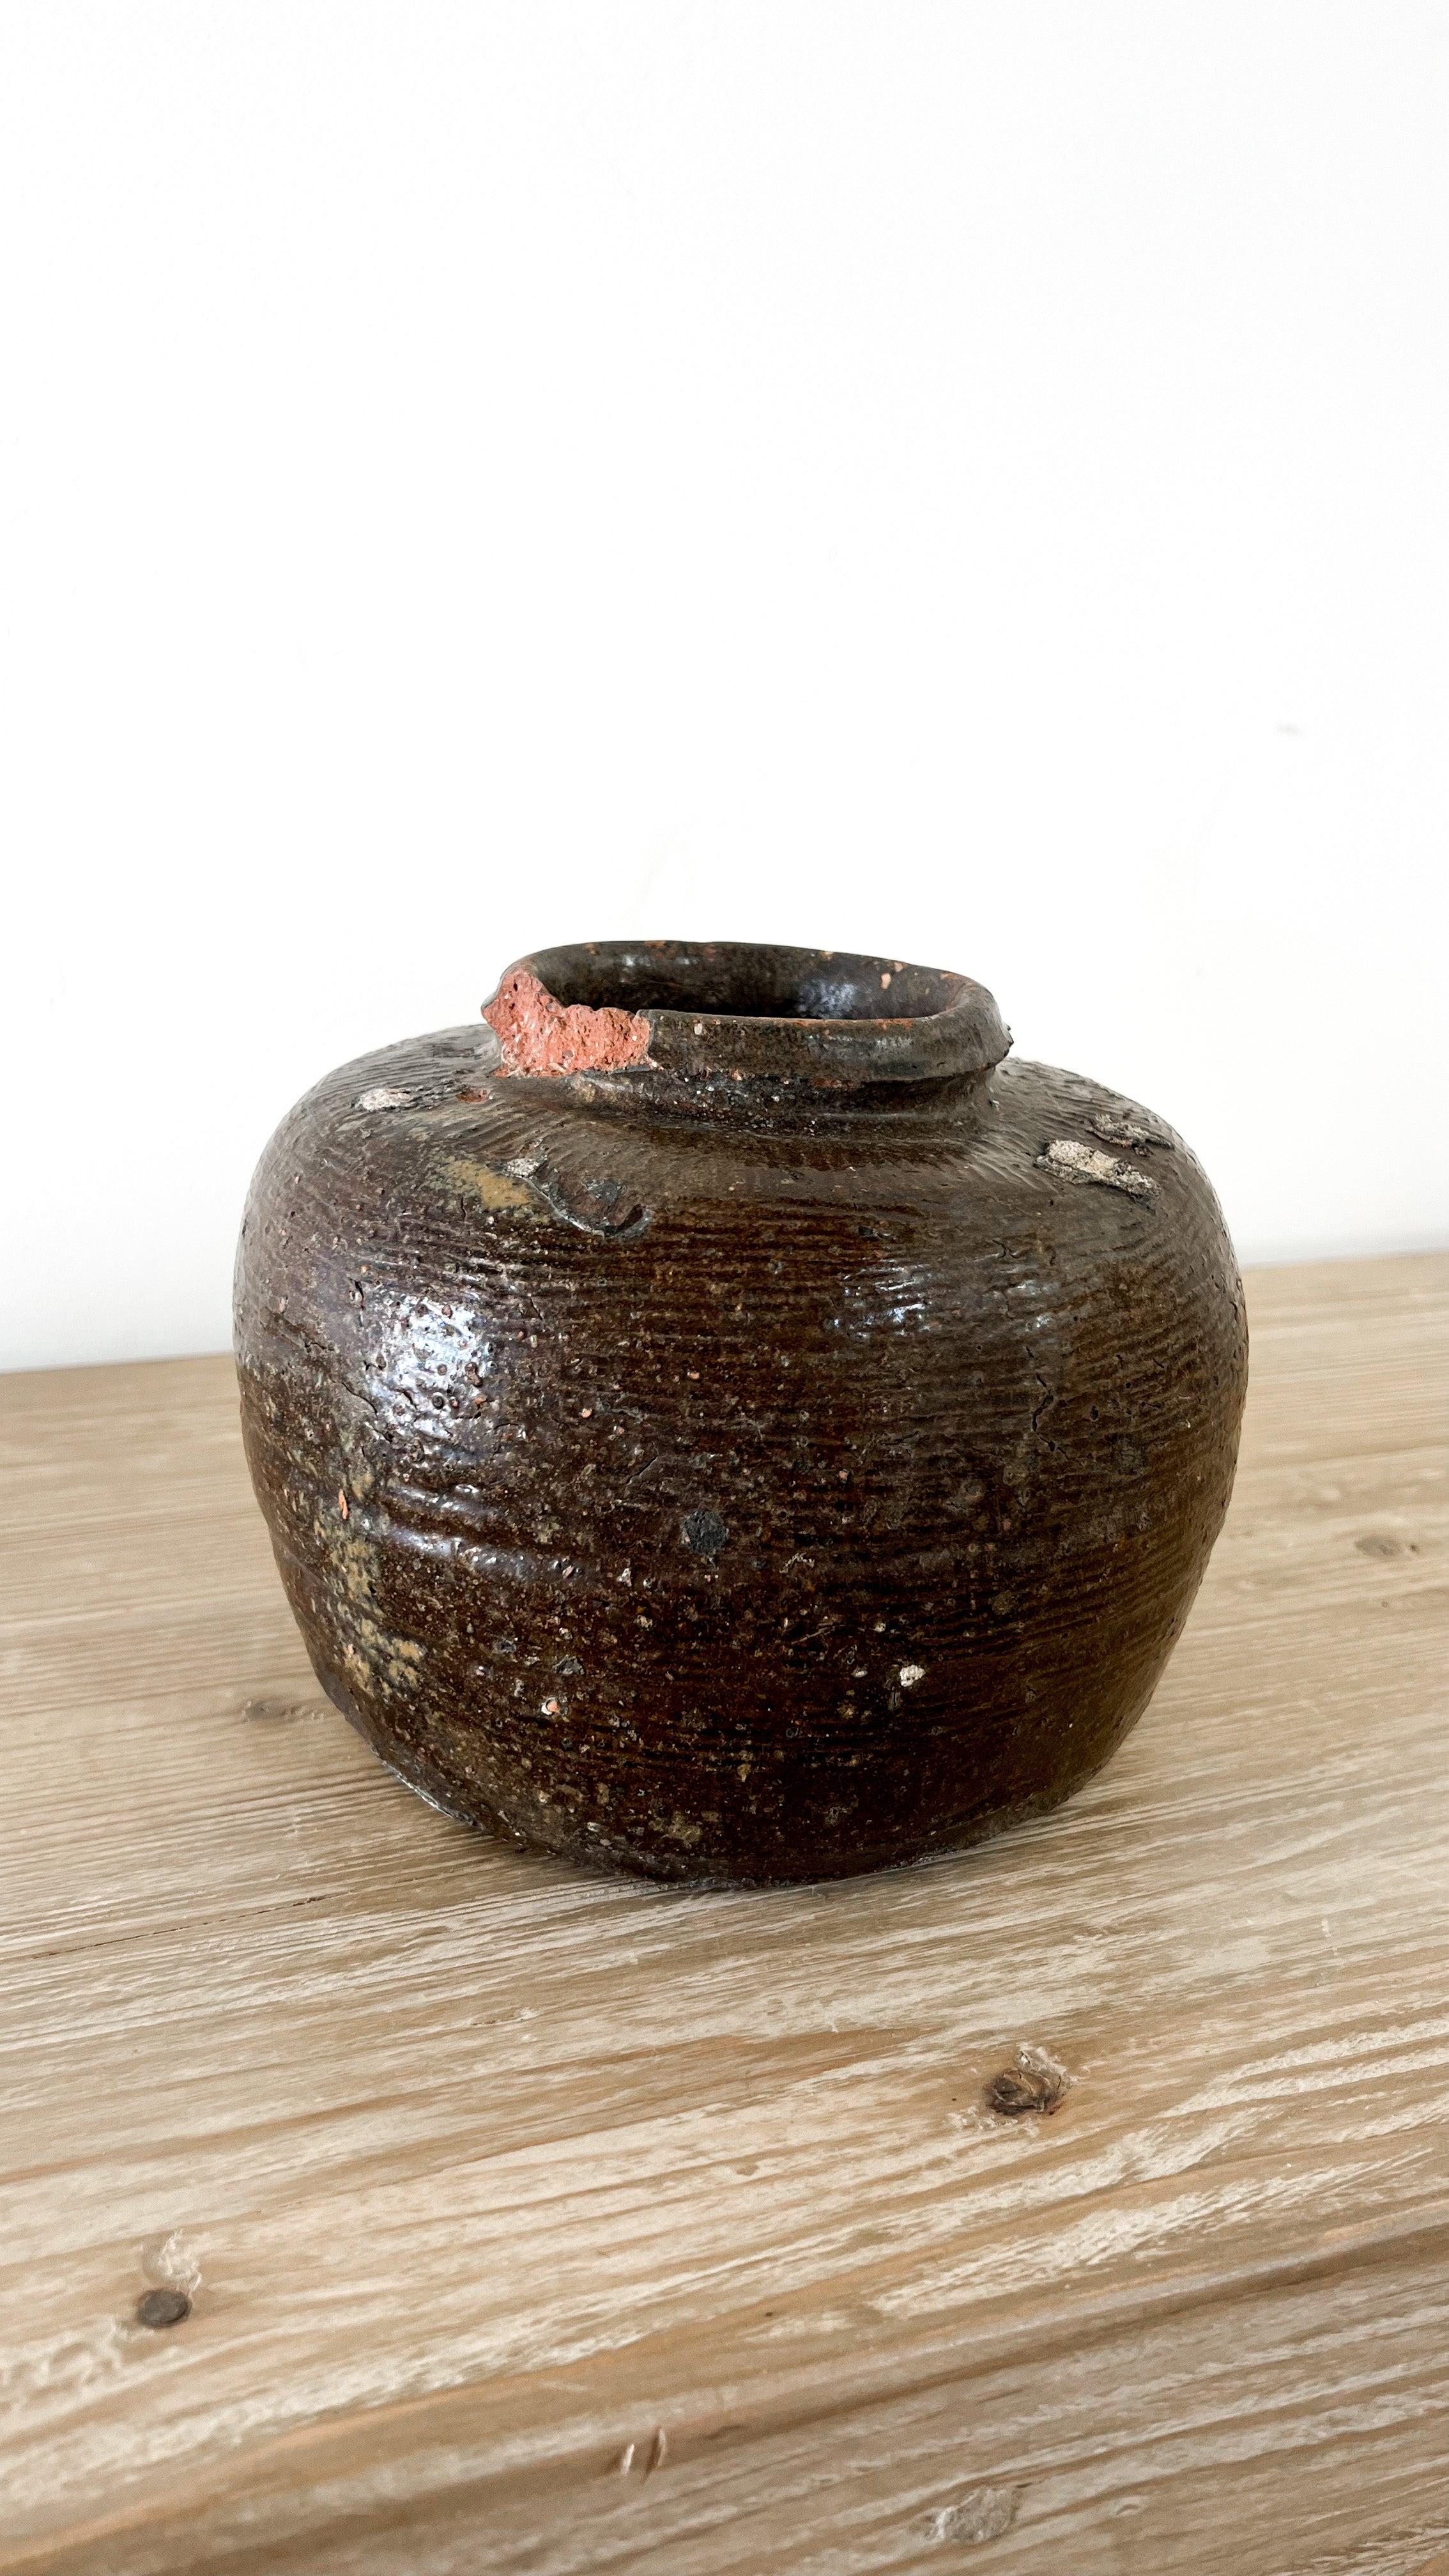 Vintage Rustic Terracotta Pots